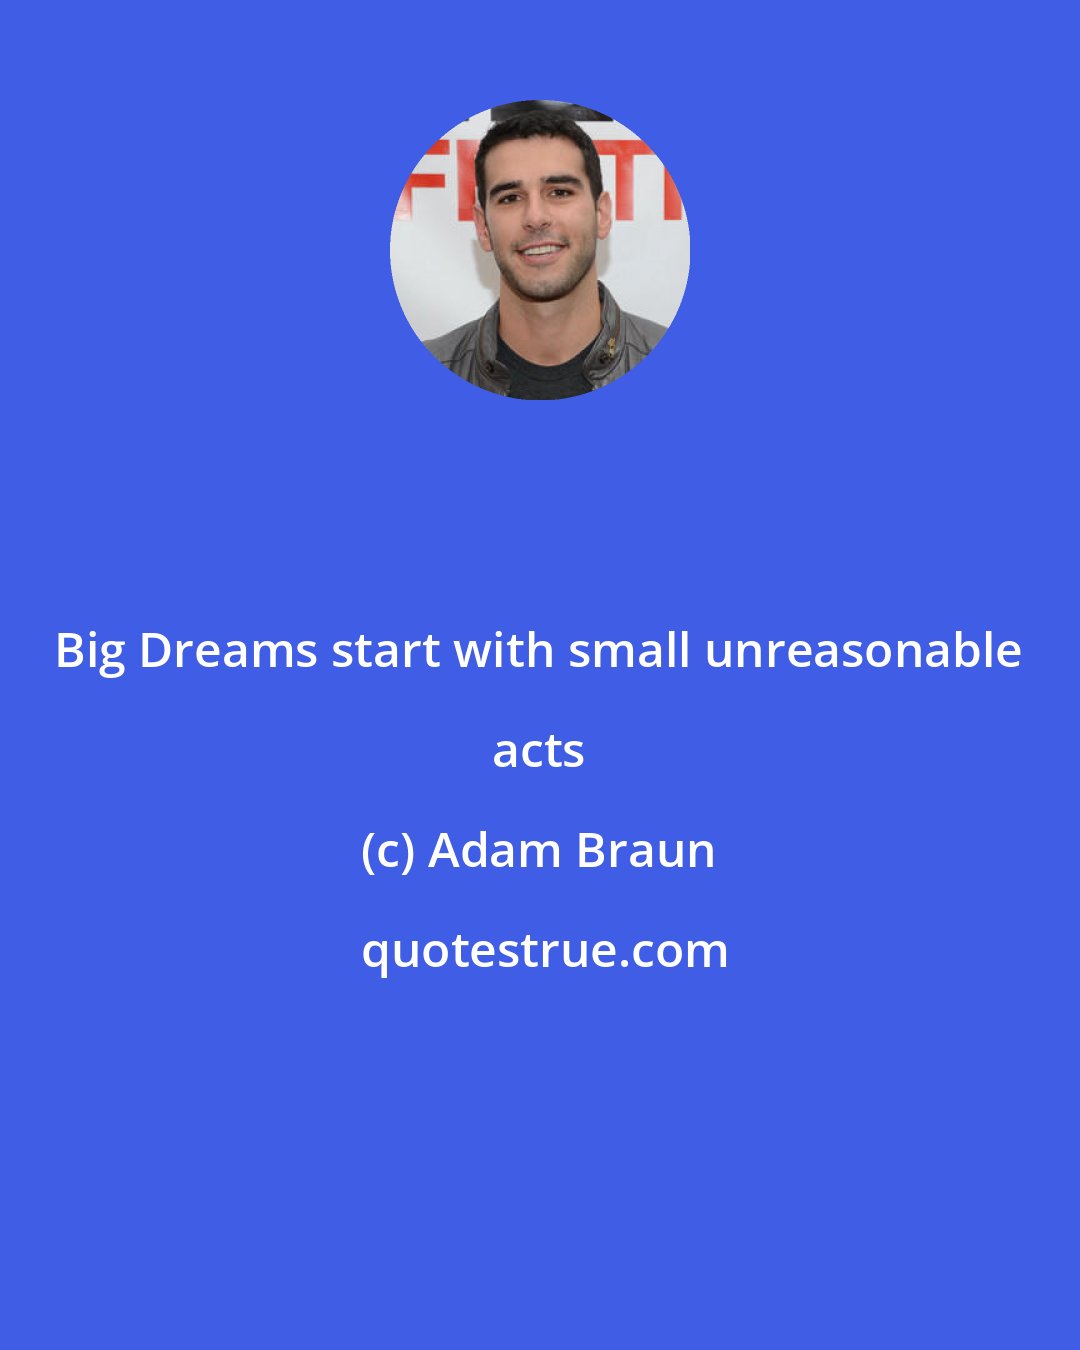 Adam Braun: Big Dreams start with small unreasonable acts